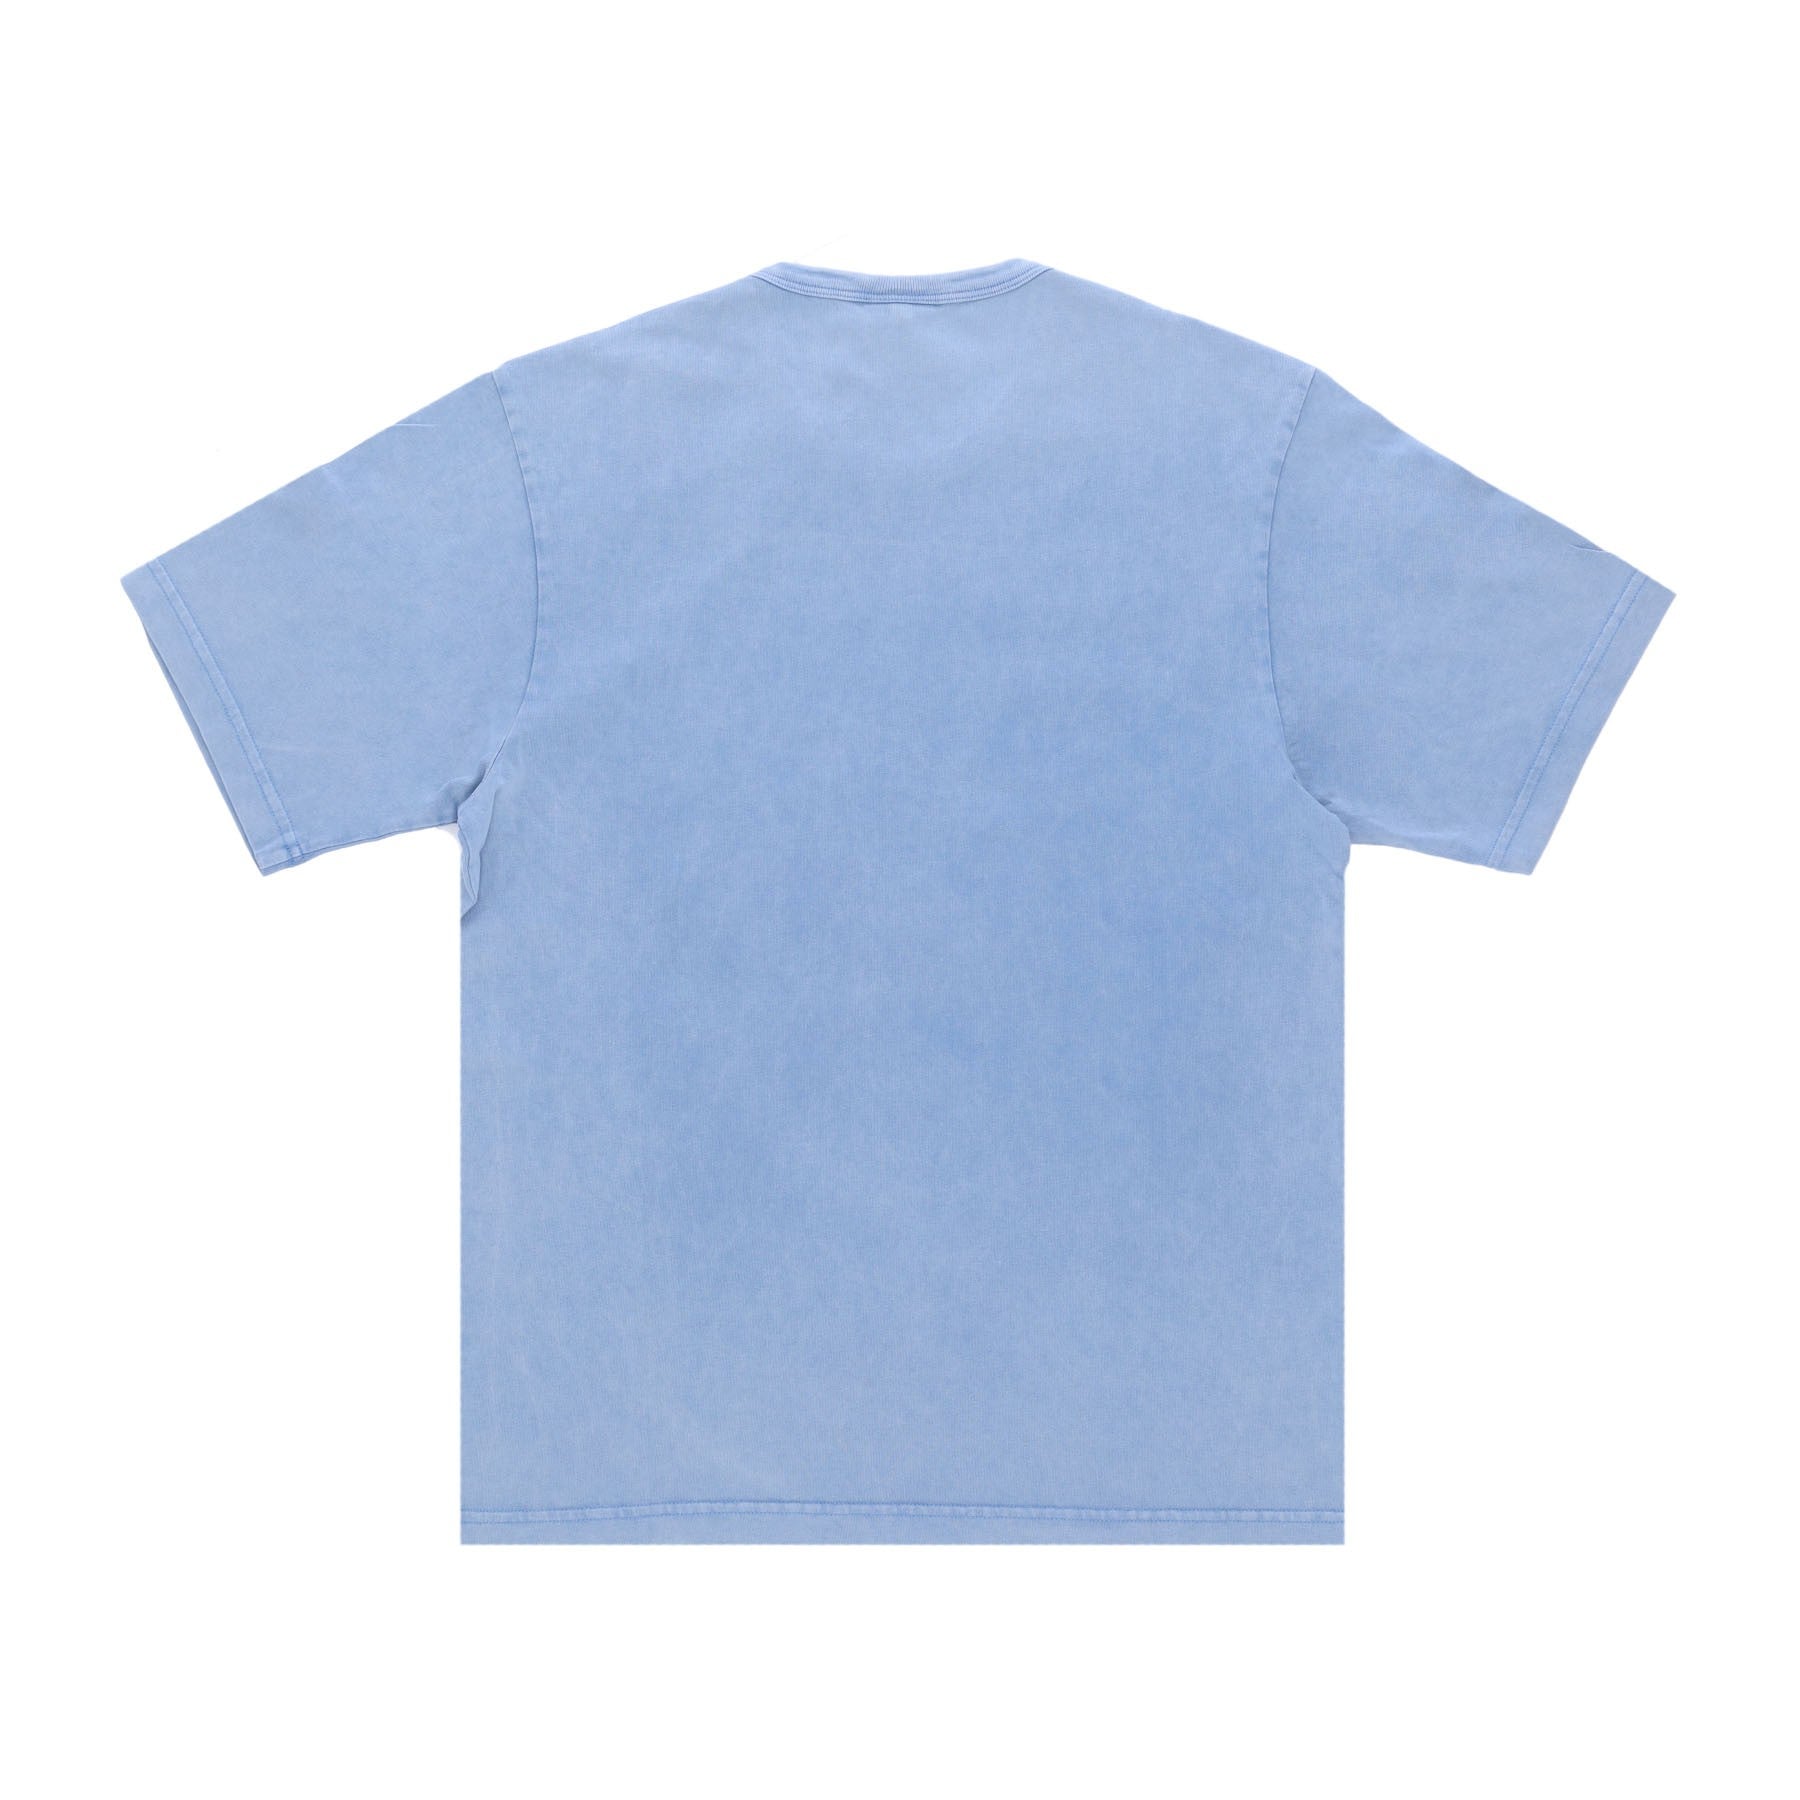 Acid Wash 20/1 Tee Light Blue Men's T-Shirt